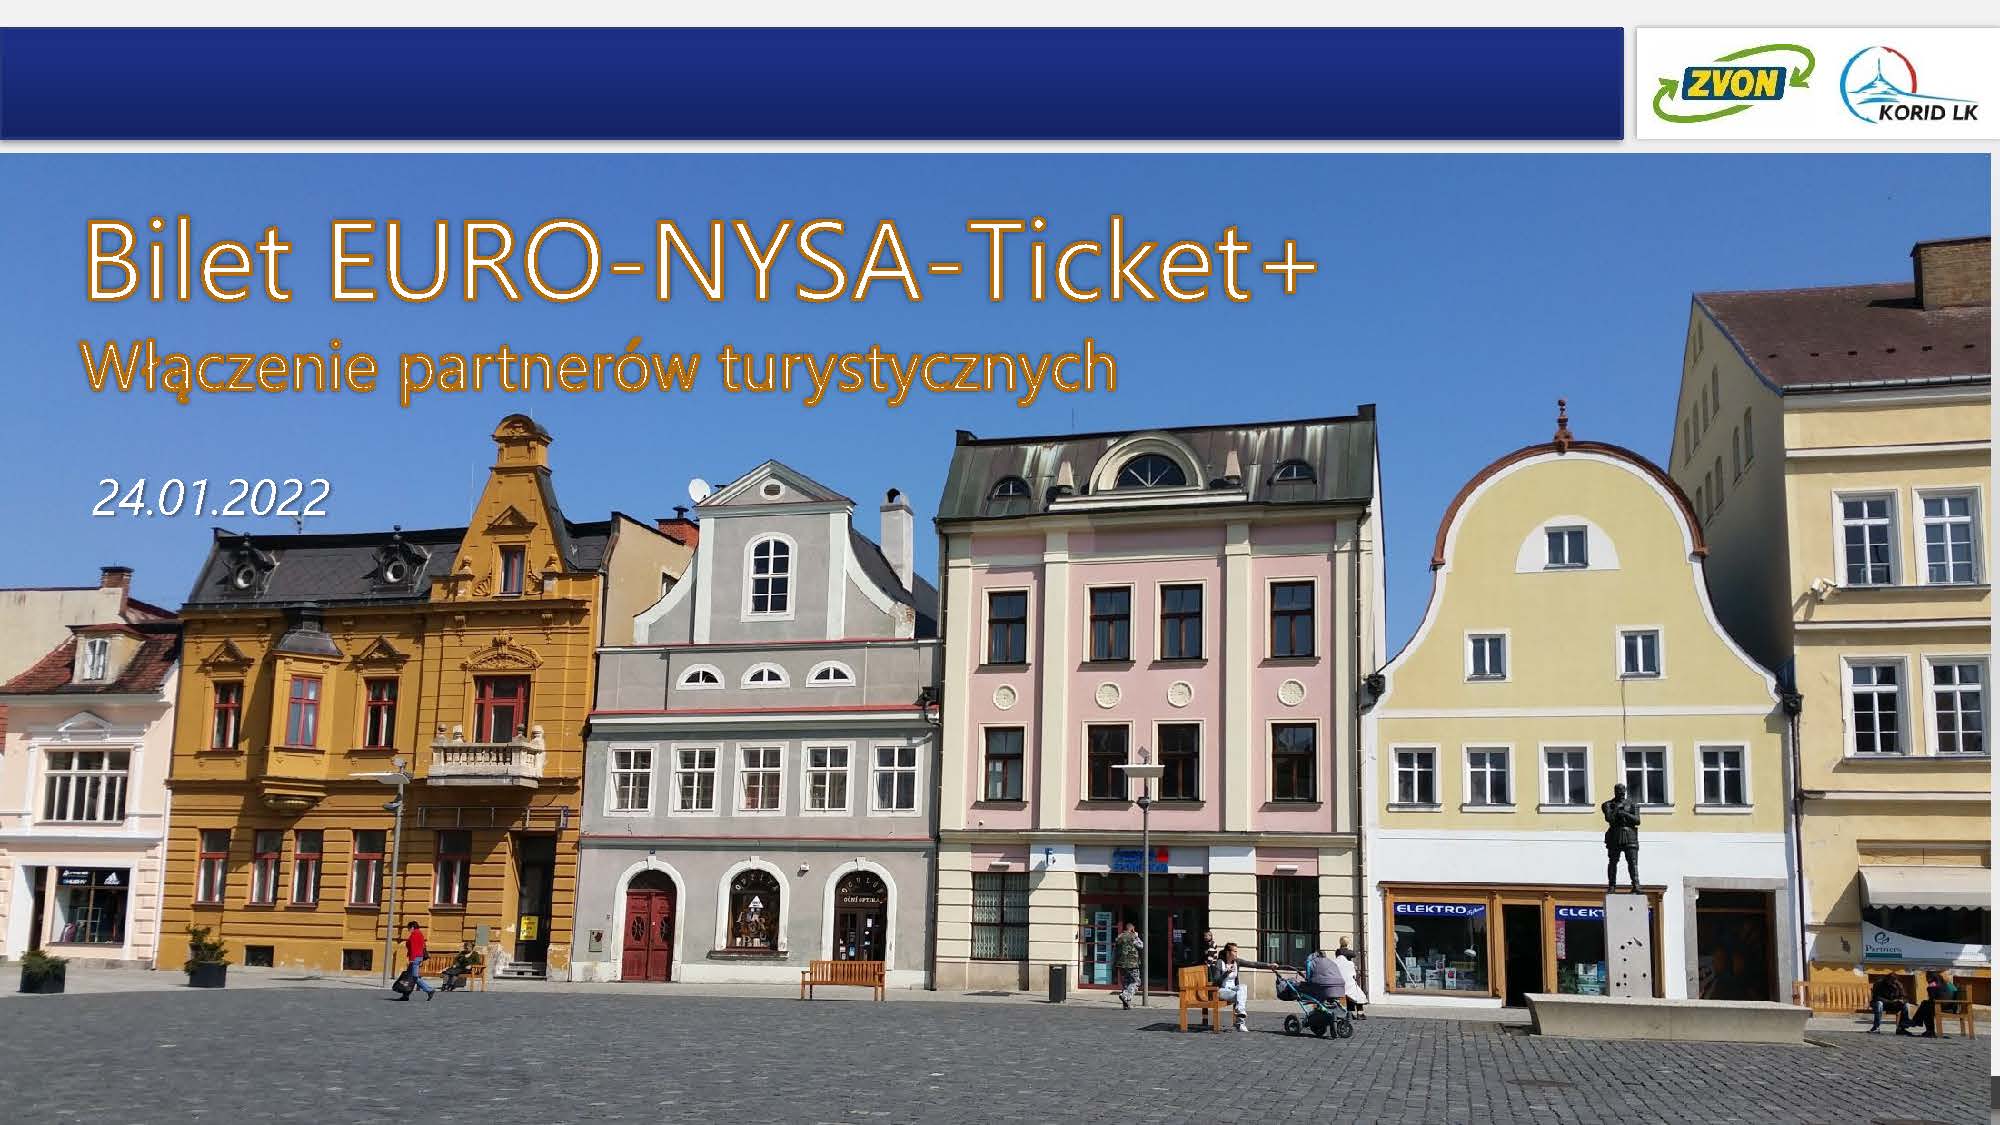 EURO-NYSA-Ticket+